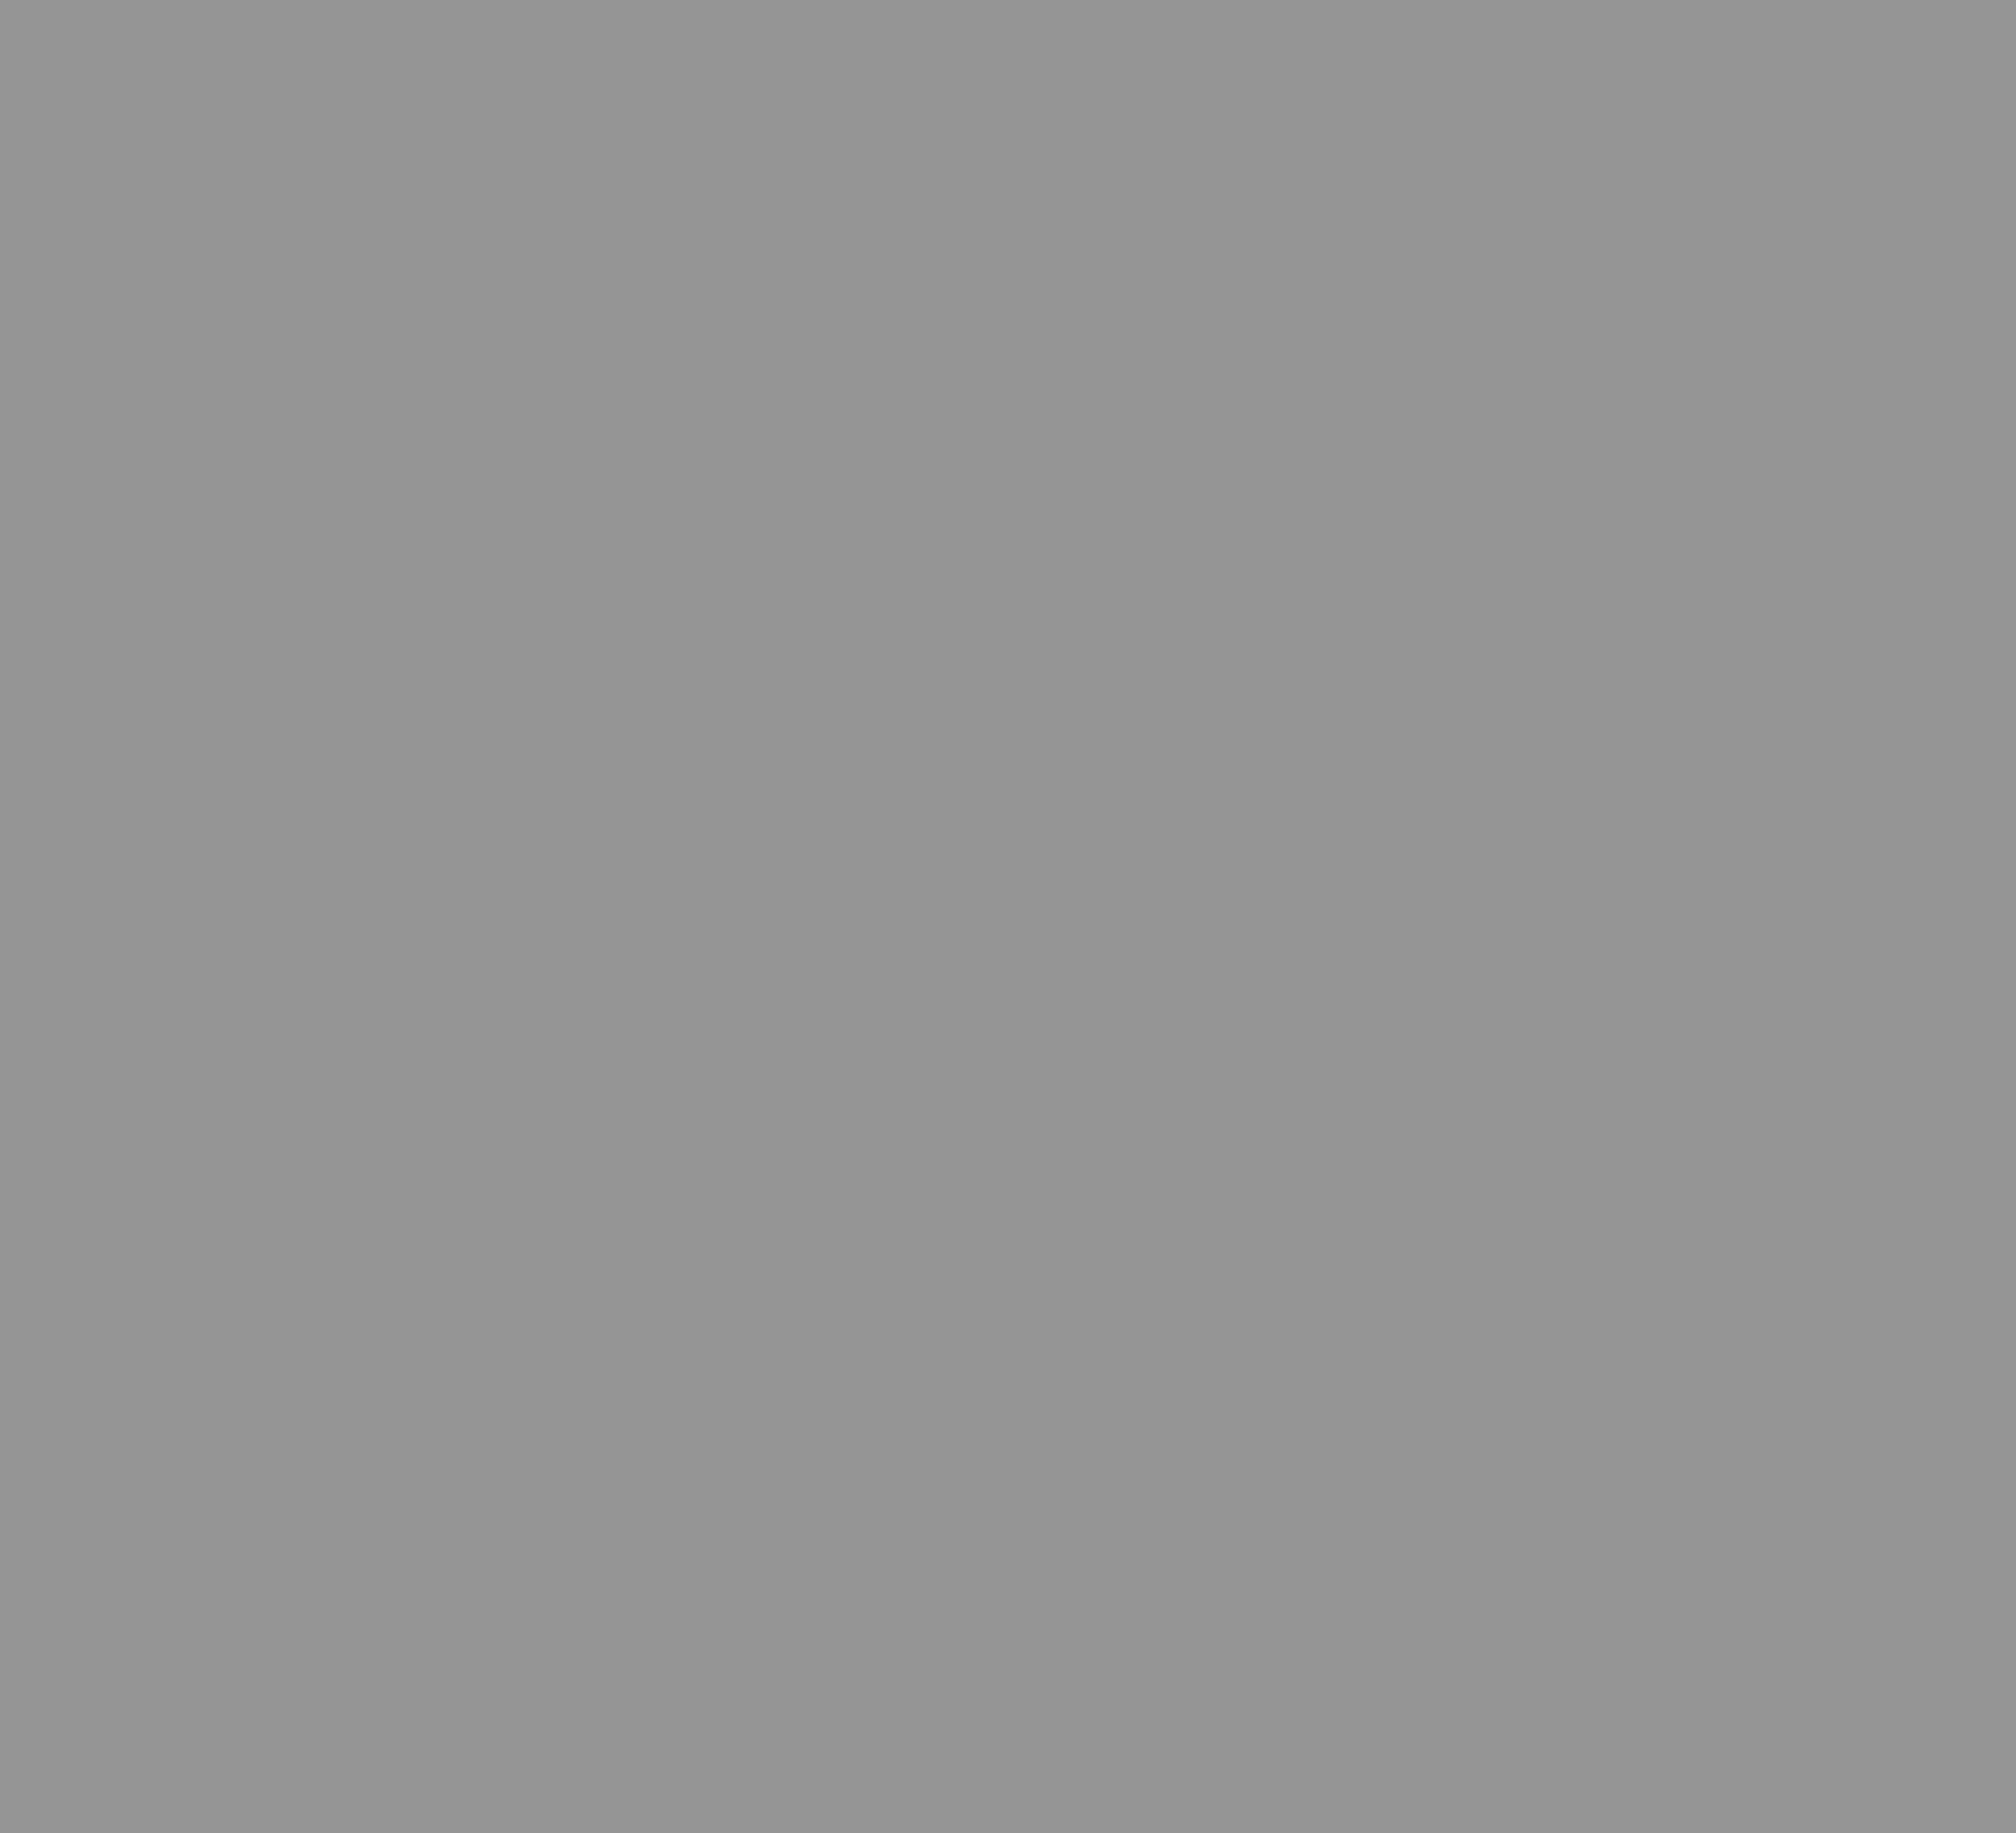 Solid Light Grey Backgrounds Solid grey  60jpg 18 jan 2006 2200x2000